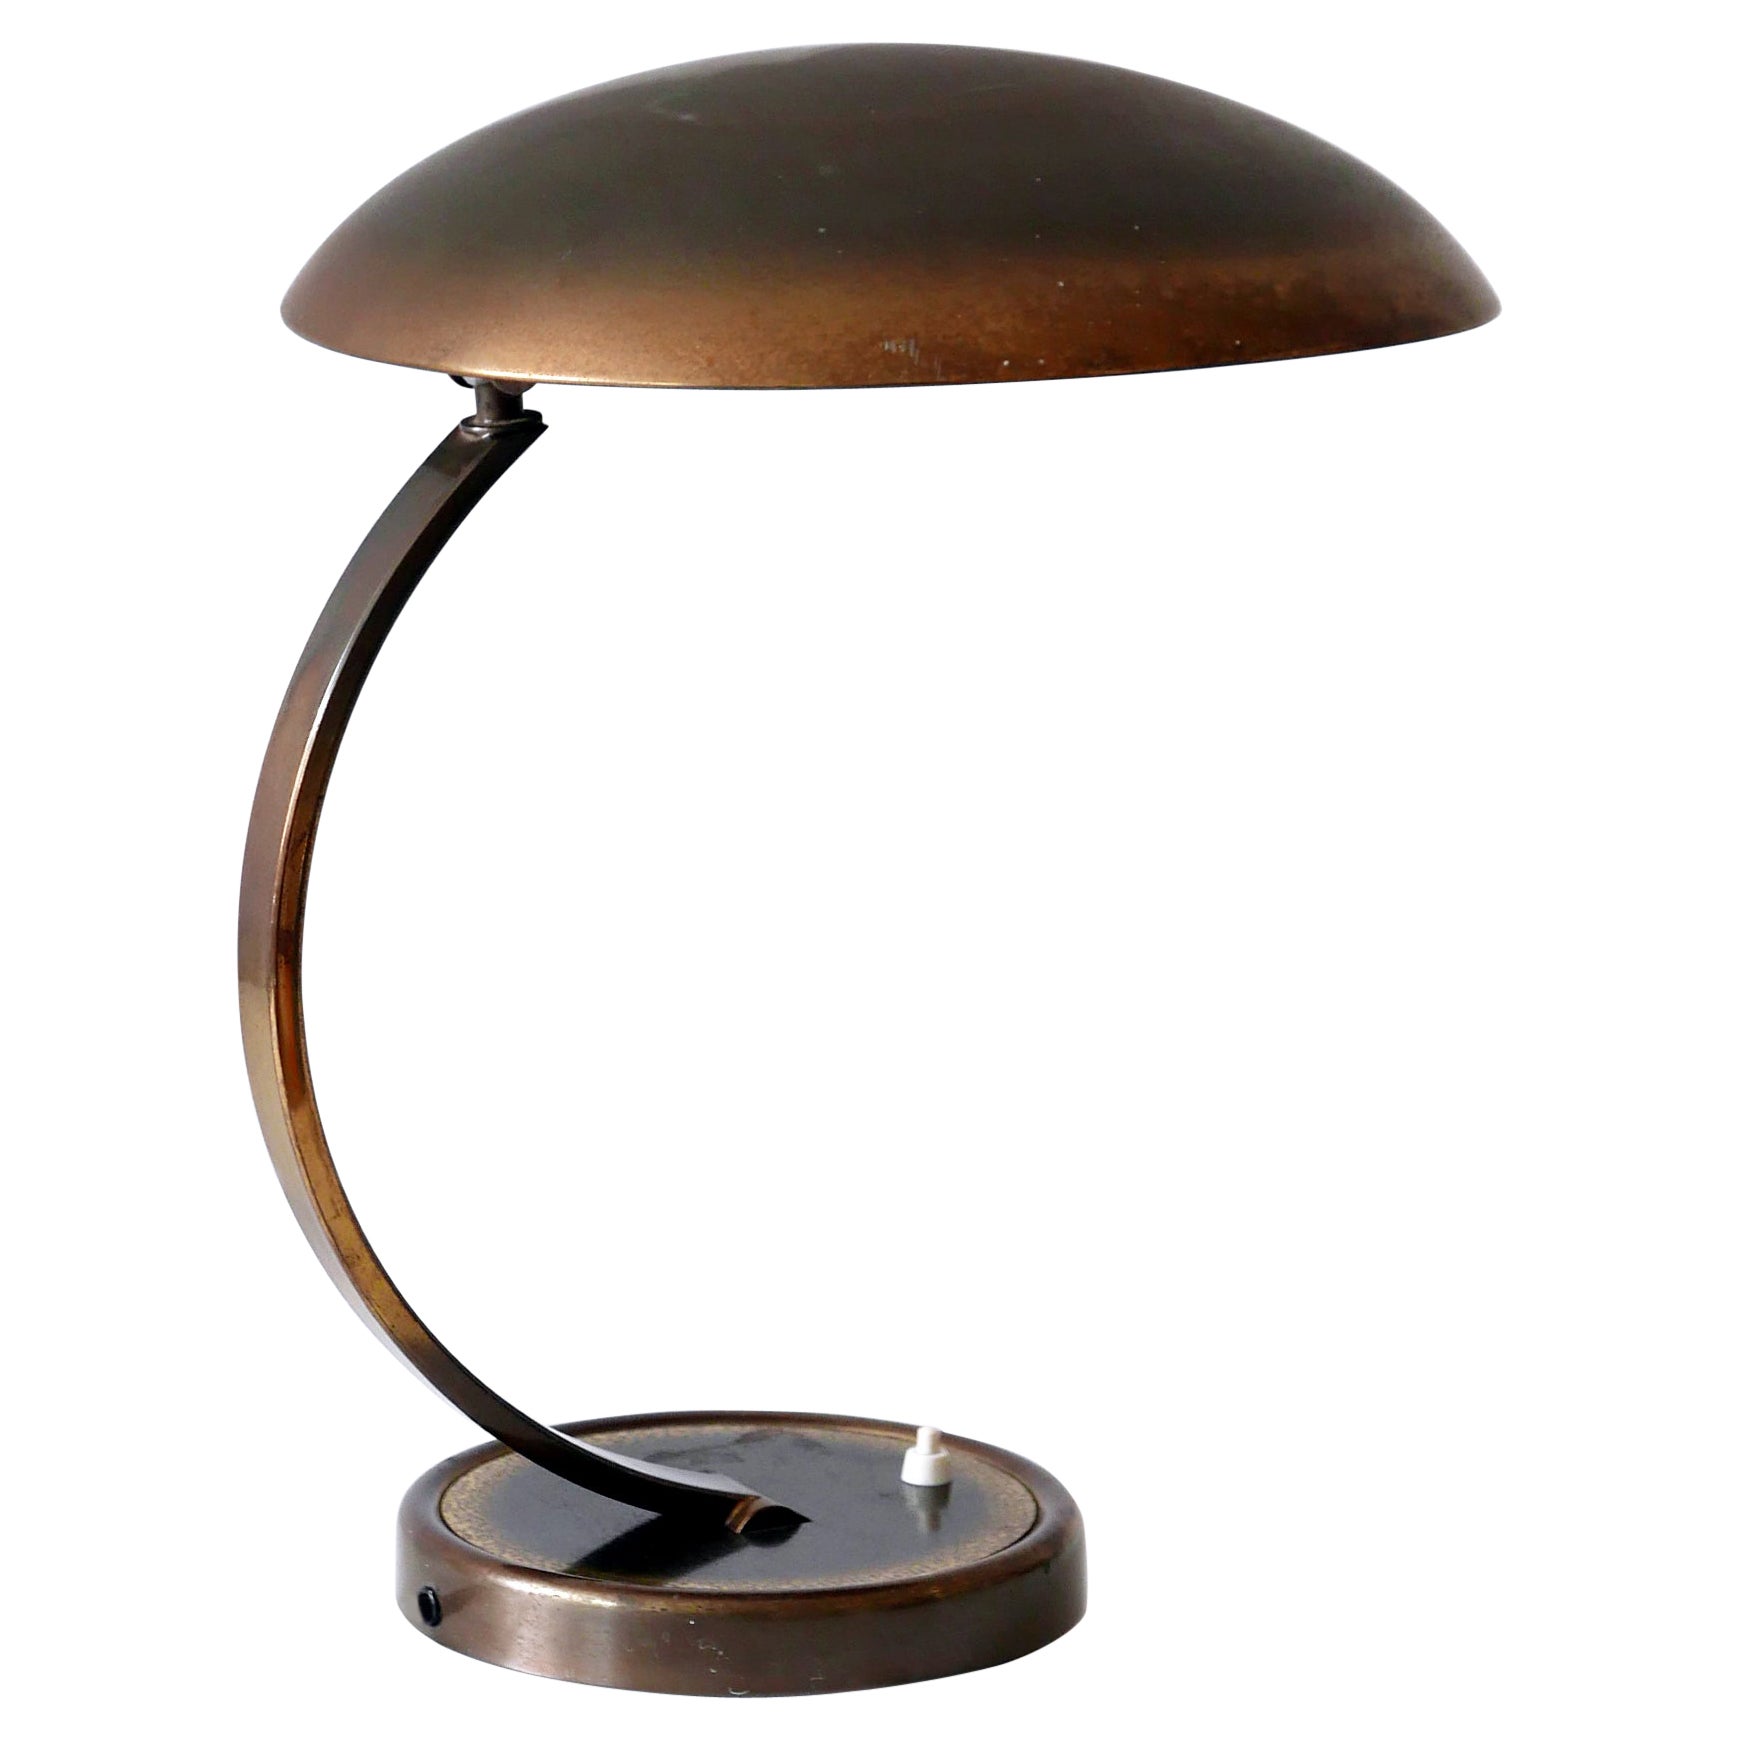 Articulated Mid-Century Modern Desk Lamp 6751 by Christian Dell for Kaiser Idell